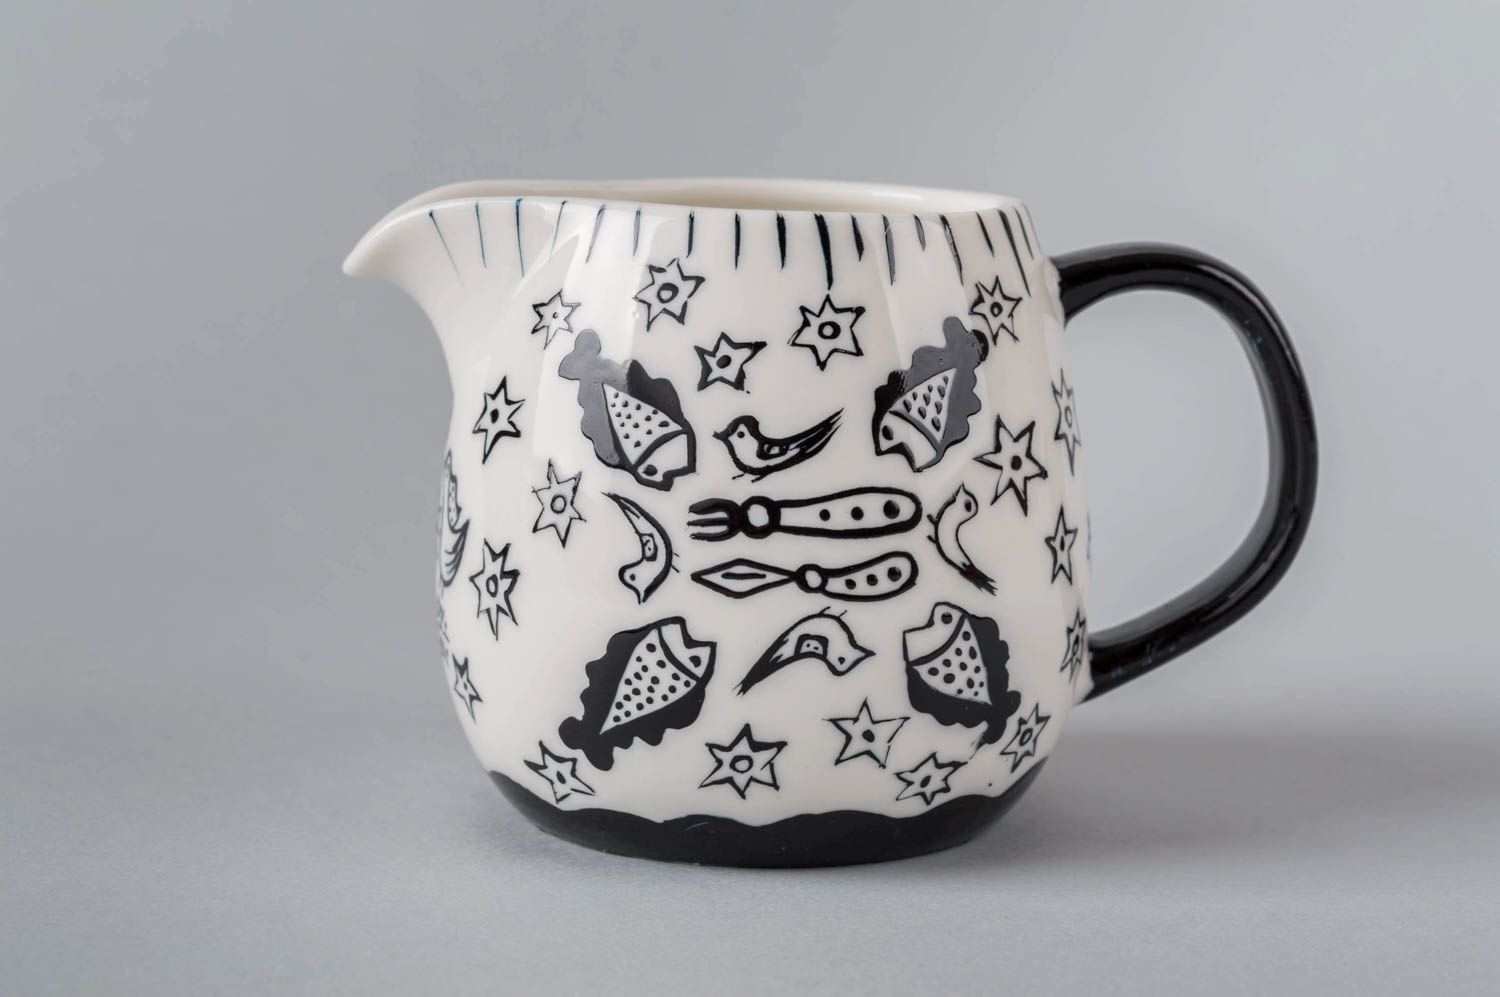 12 oz ceramic porcelain creamer jug in white and black color with fish design 0,4 lb photo 2